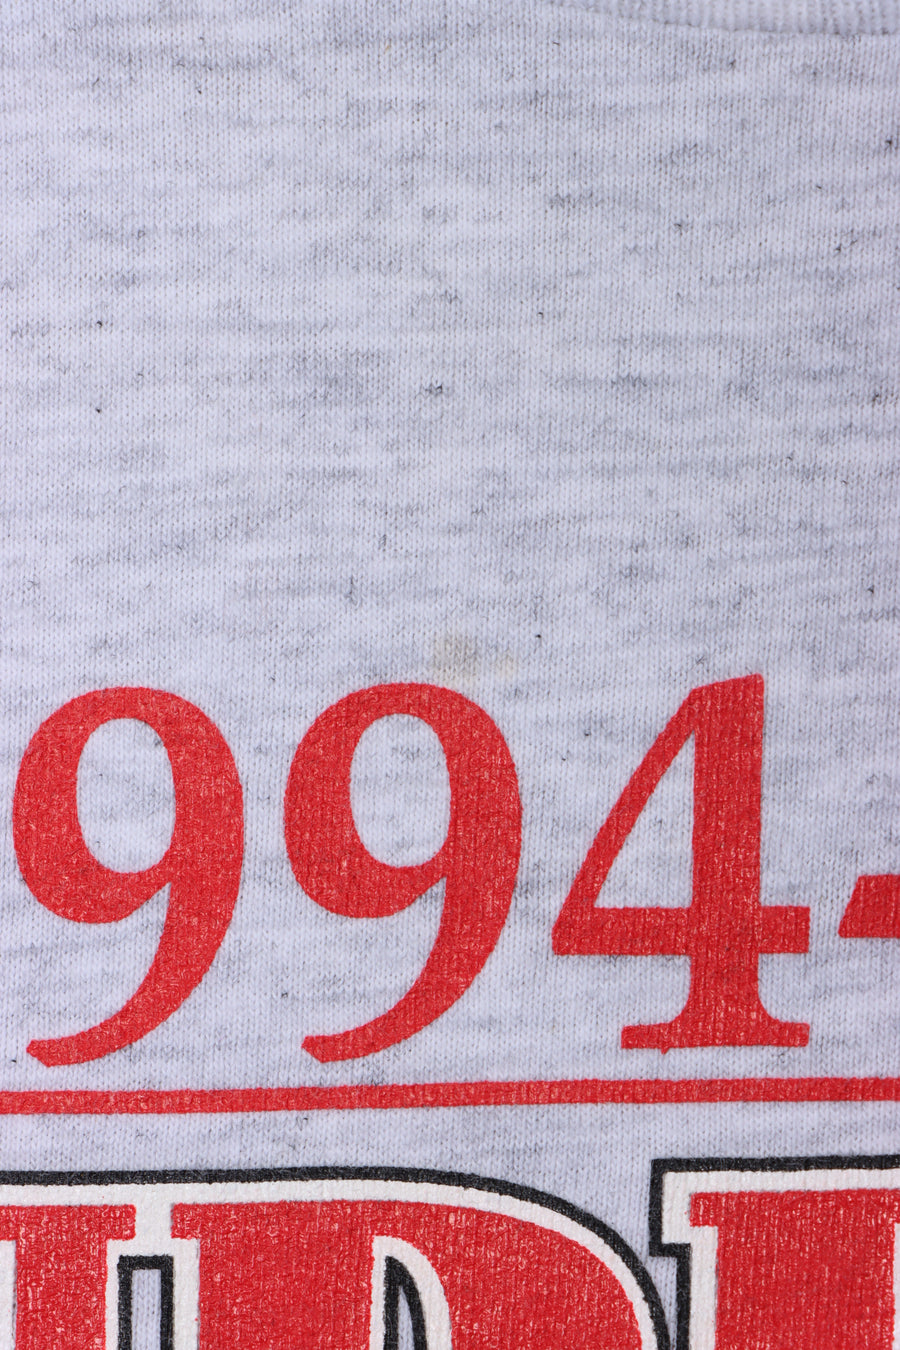 Indiana Hoosiers 1994/1995 Basketball Schedule NUTMEG T-Shirt USA Made (M)